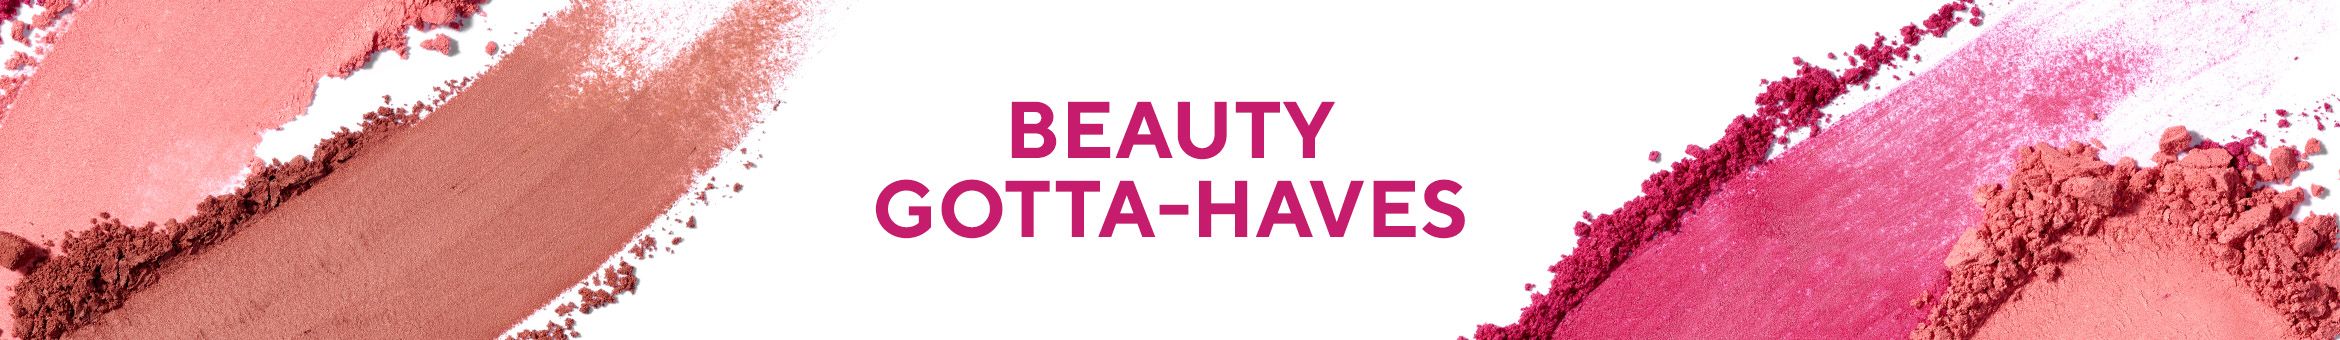 Beauty Gotta-Haves